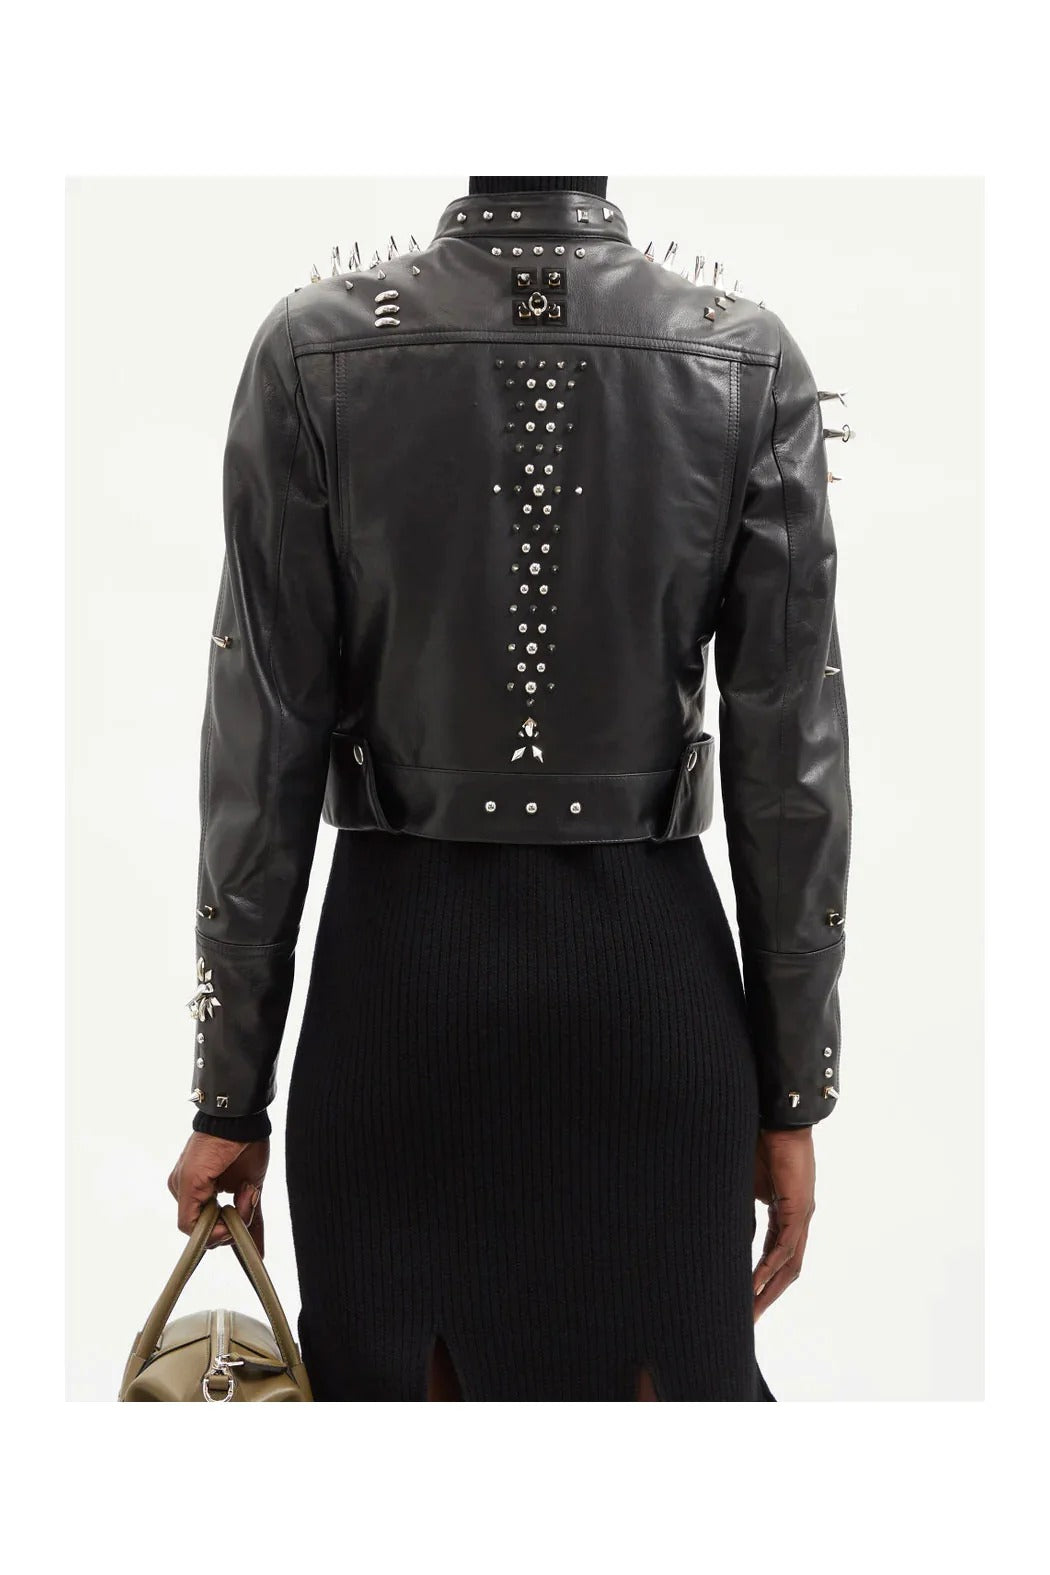 Edgy Elegance: Women's Silver Spiked Black Biker Jacket